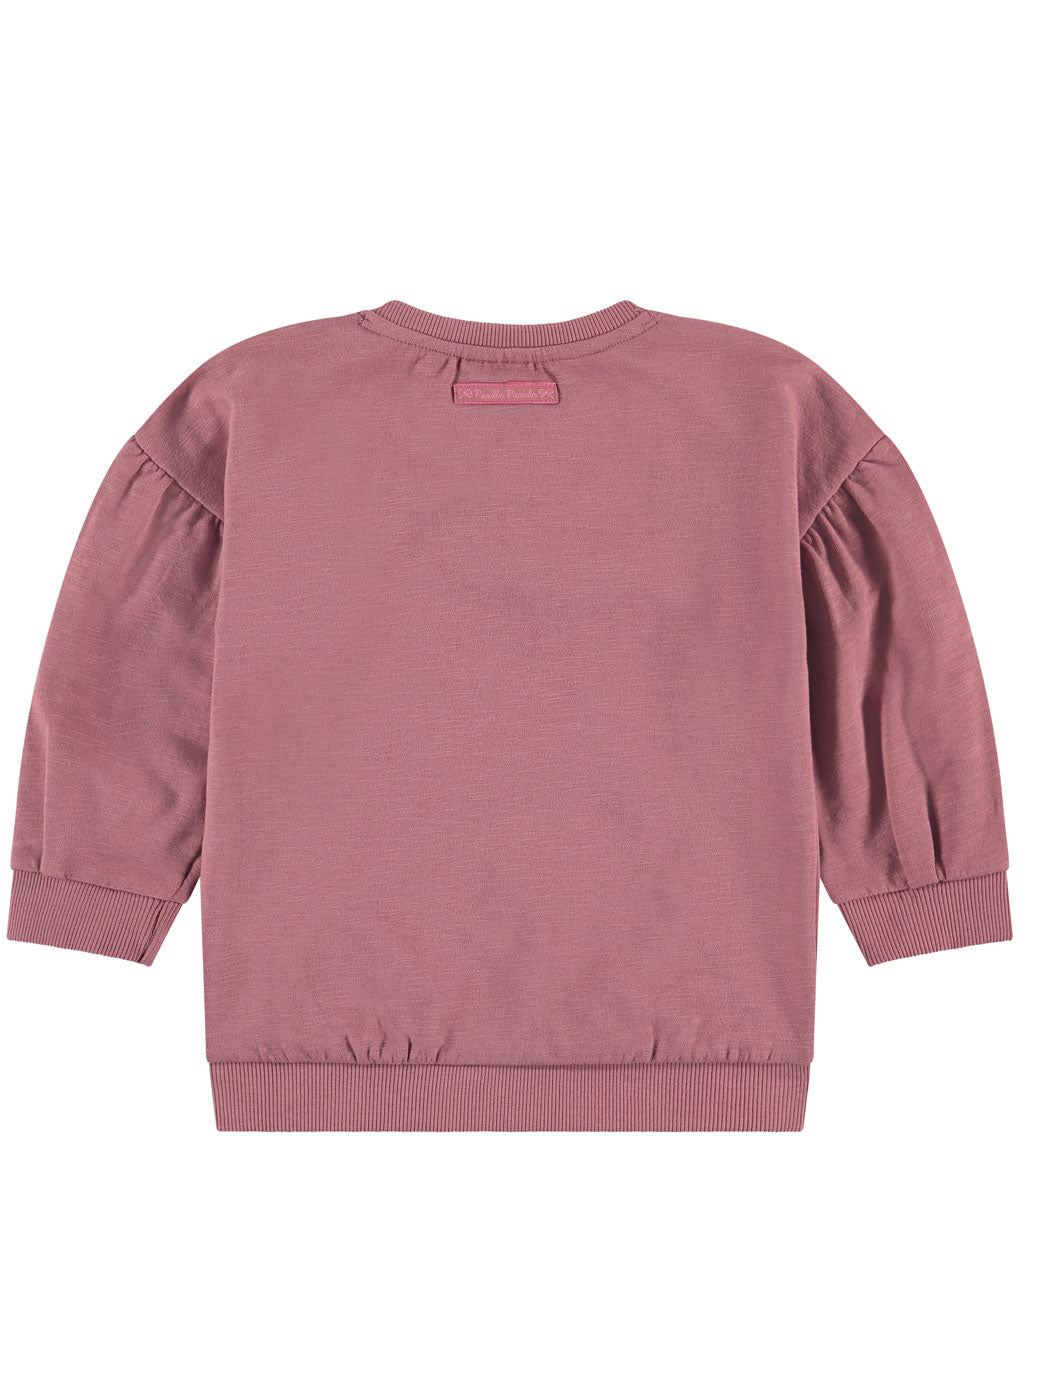 Babyface - Girls Sweatshirt - BBE23608490 Pink